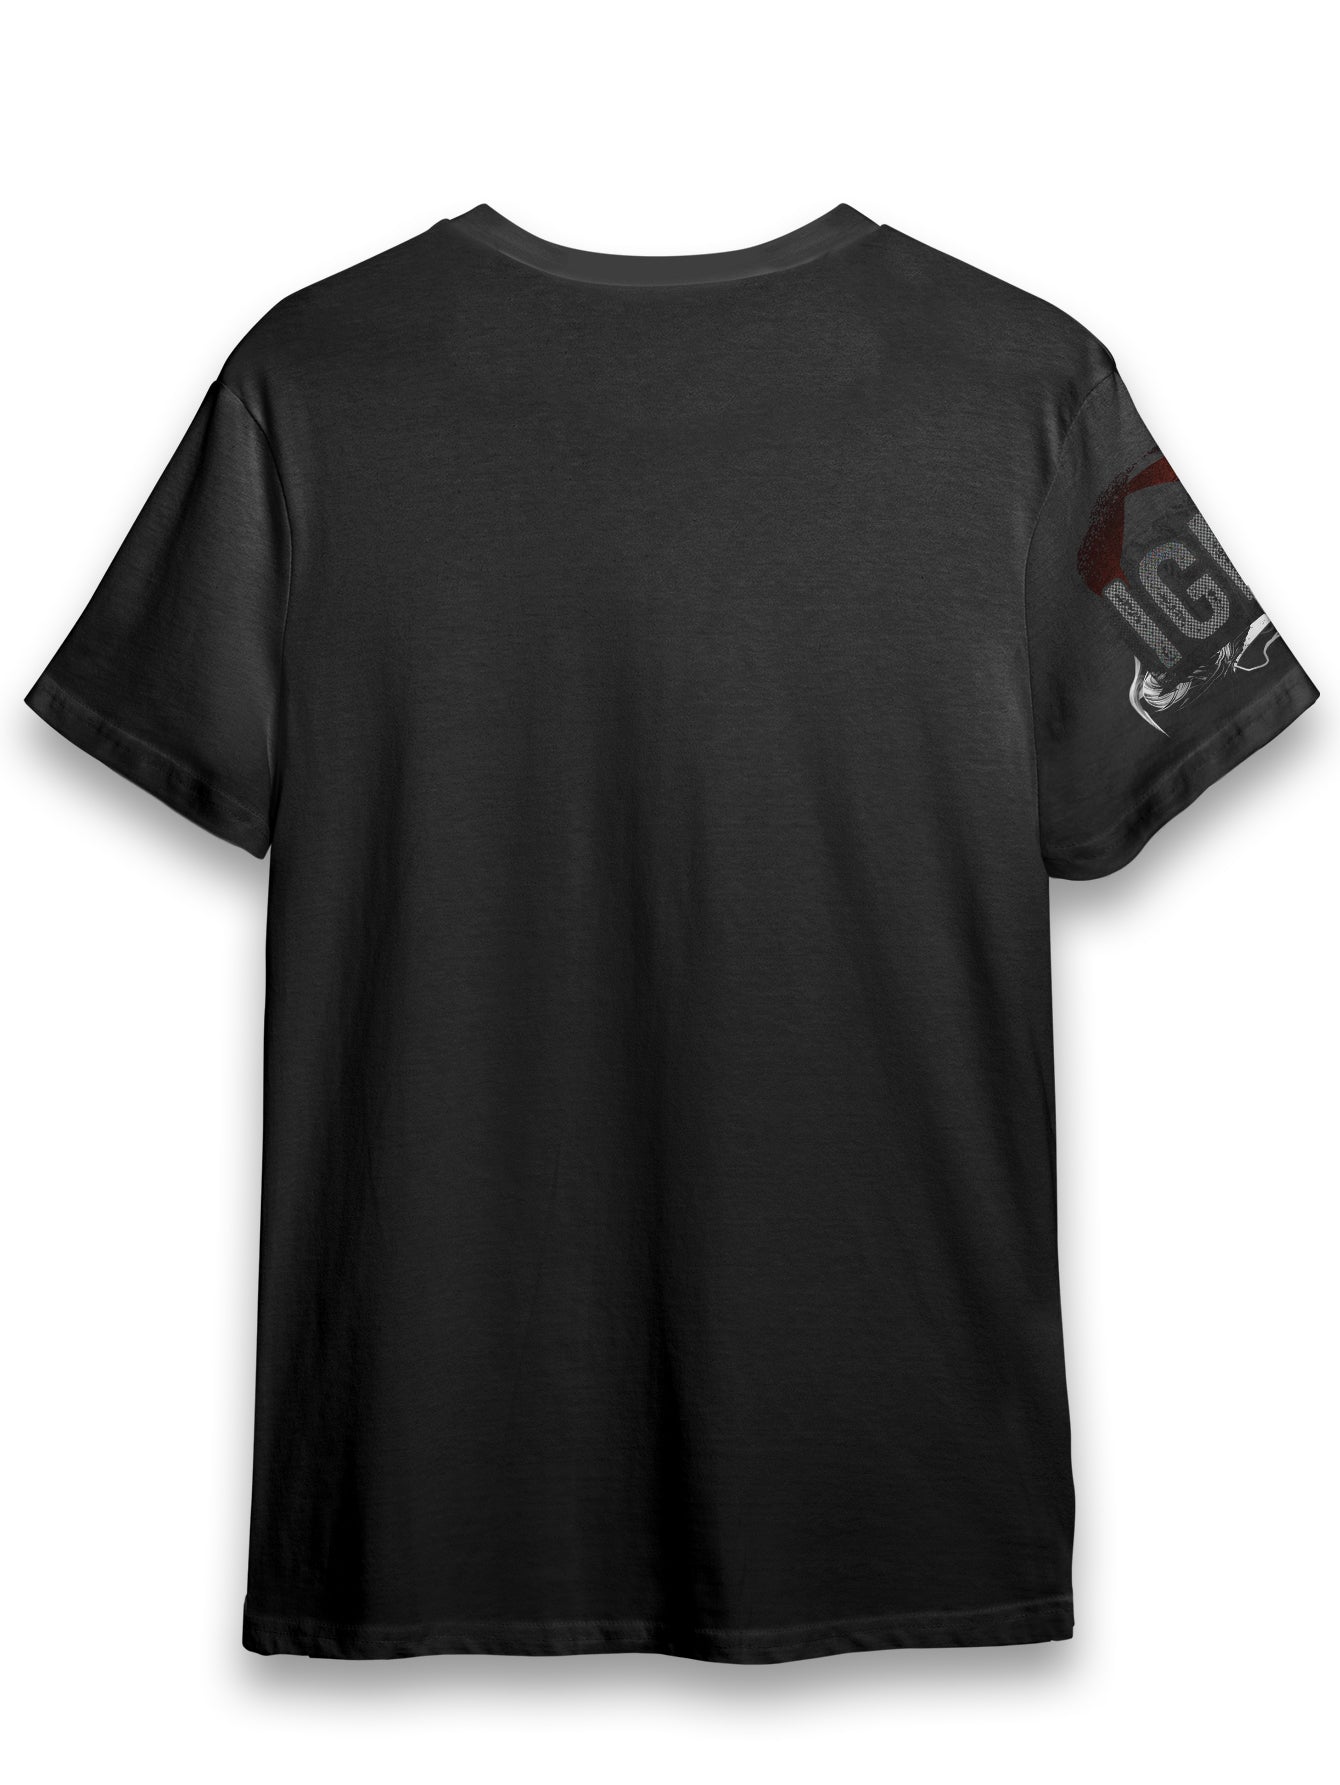 Red Knight Unisex T-Shirt